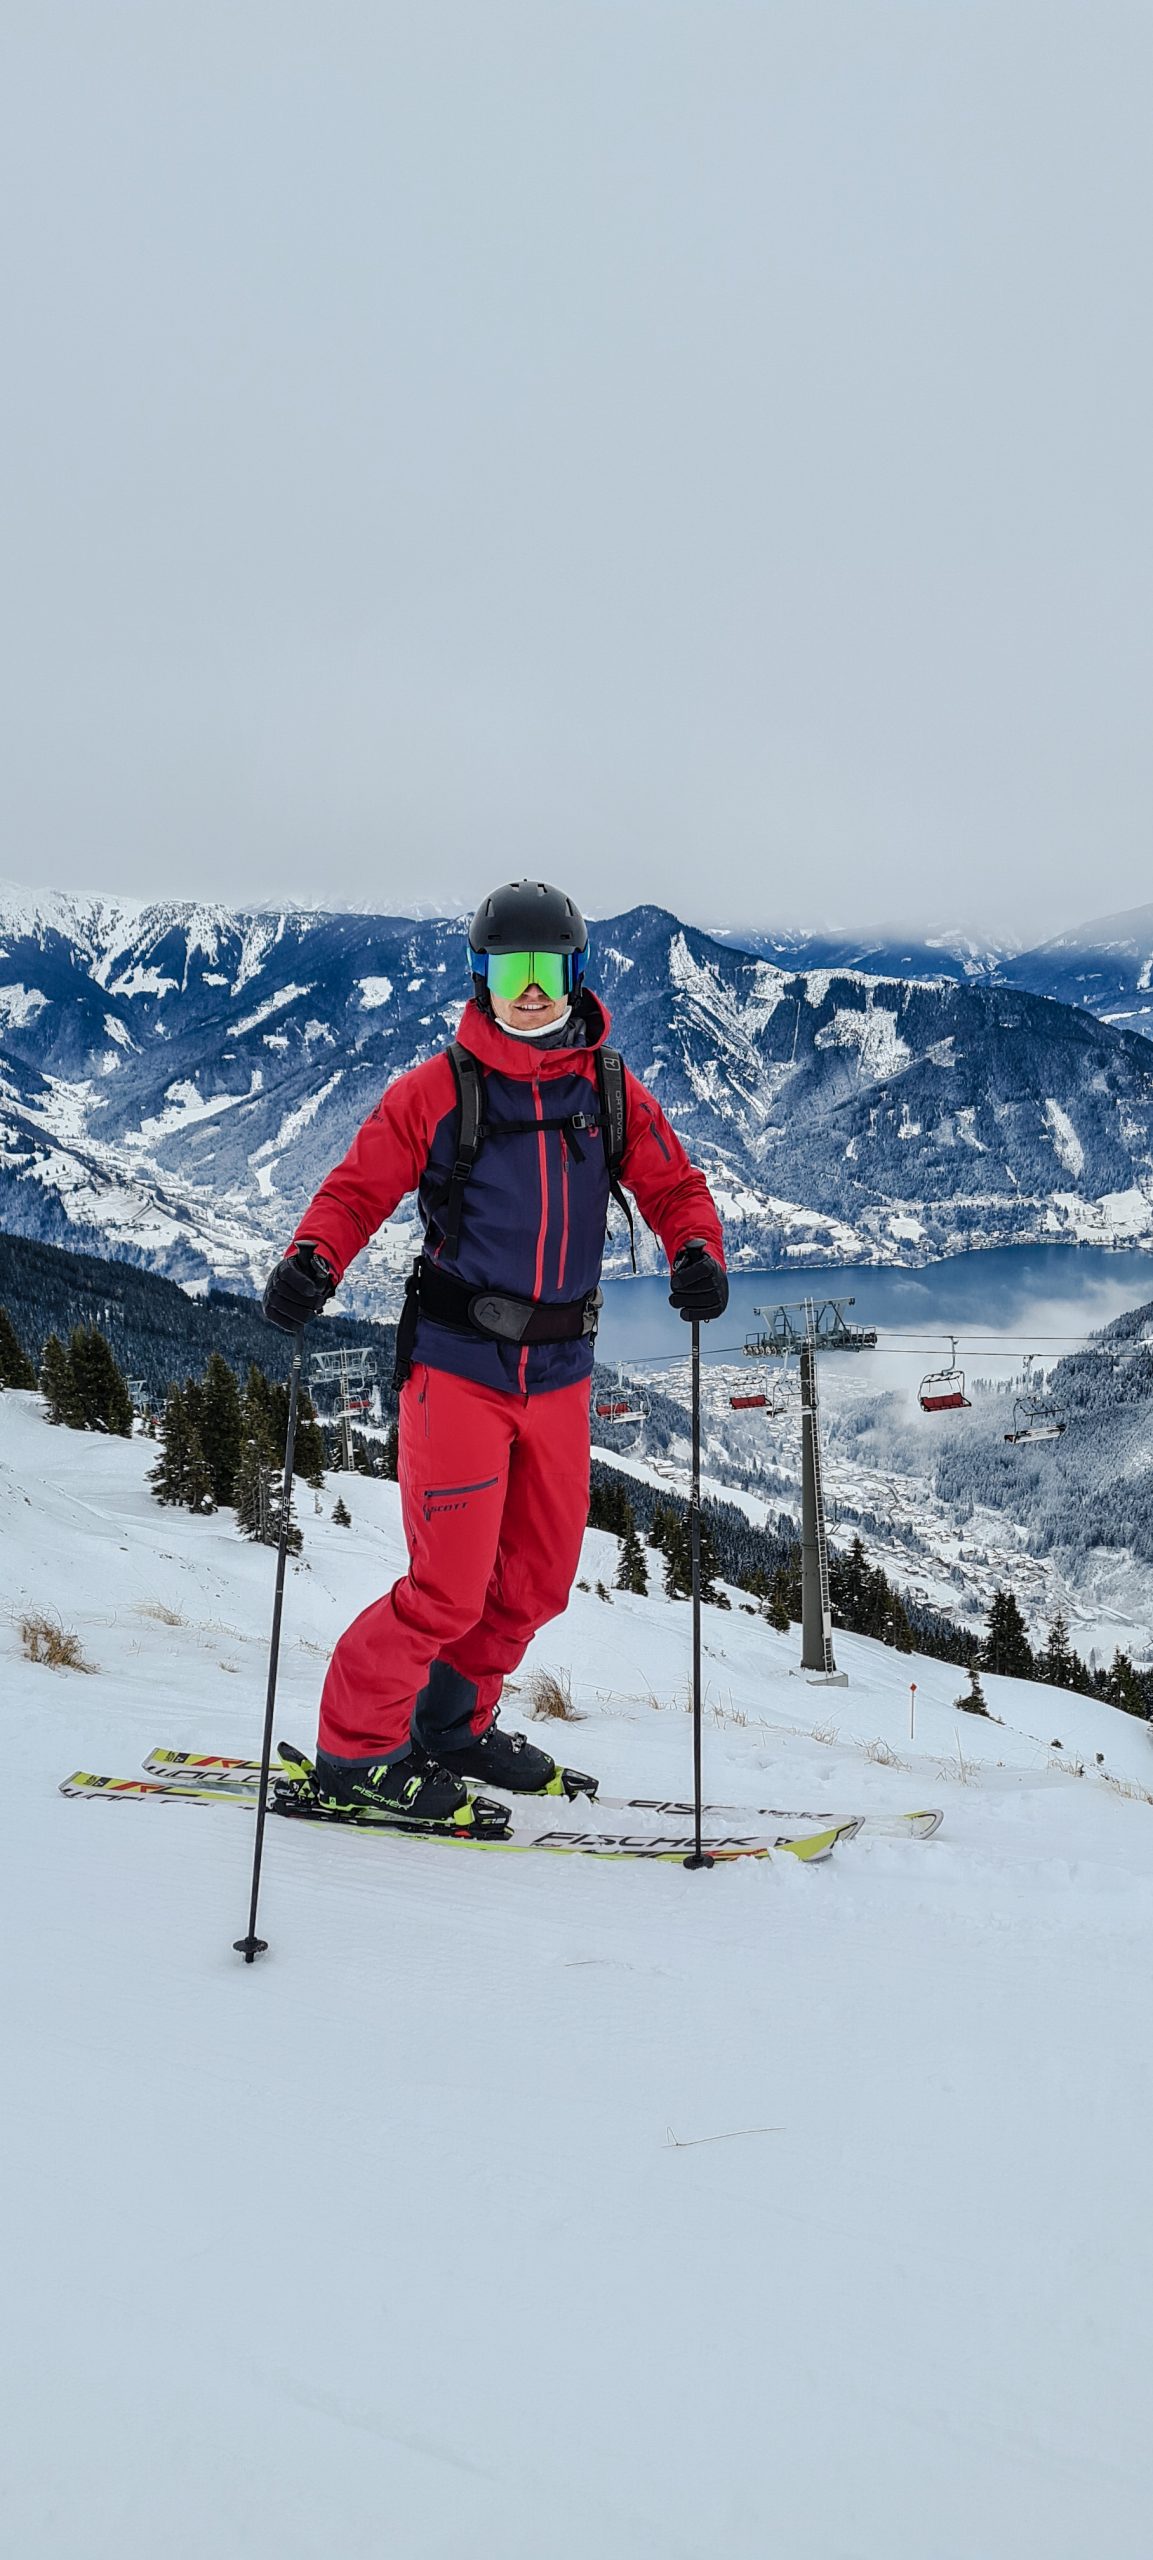 Skiën tijdens de lockdown in Zell am See - Kaprun